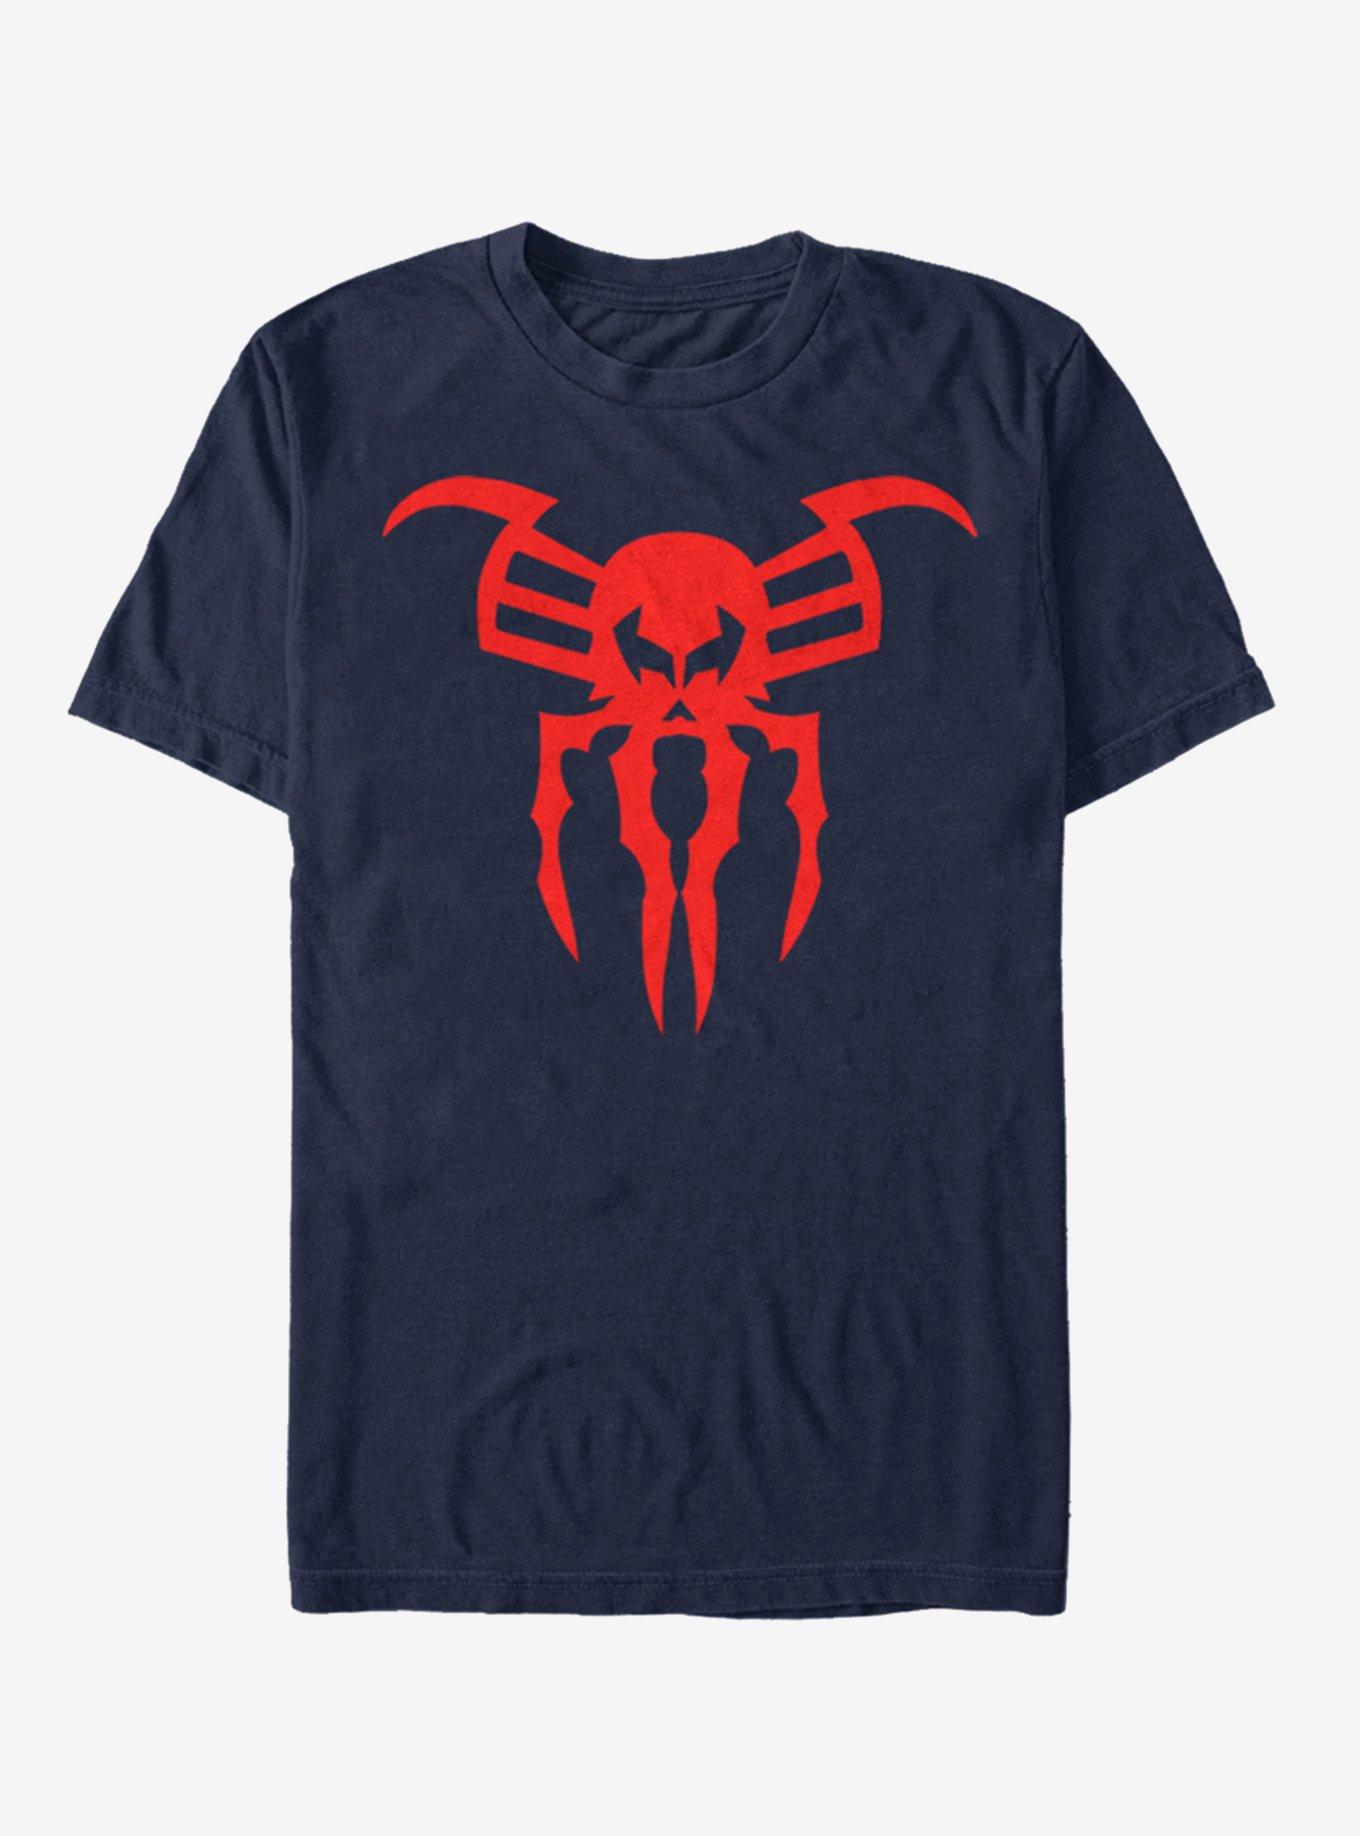 Marvel Spider-Man Spider-Man 2099 Icon T-Shirt, NAVY, hi-res